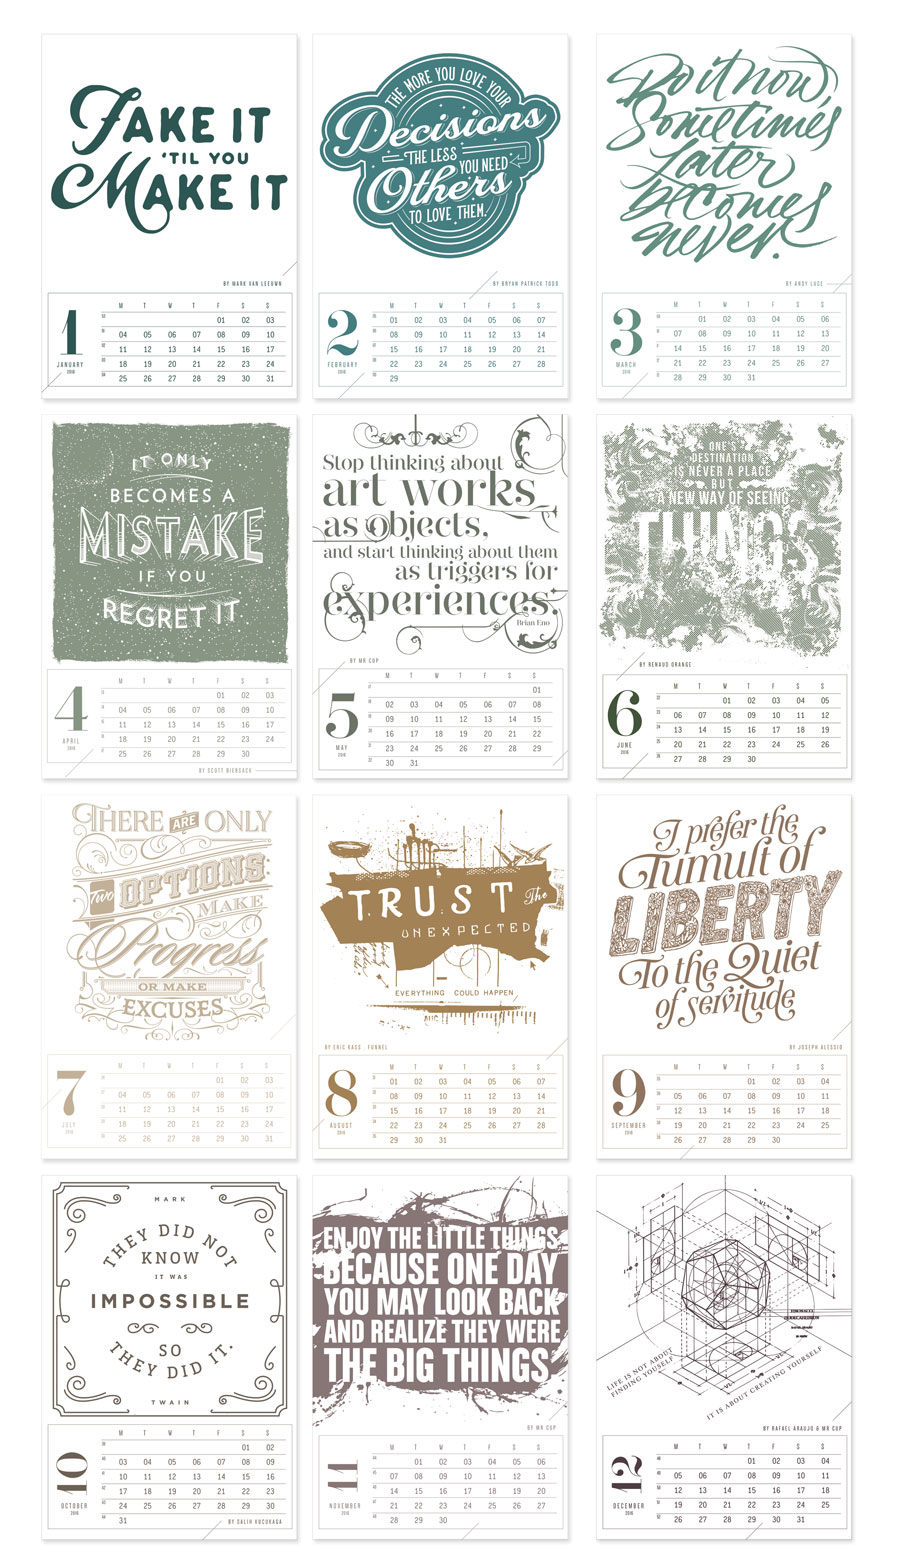 2016 letterpress calendar printing www.mr-cup.com